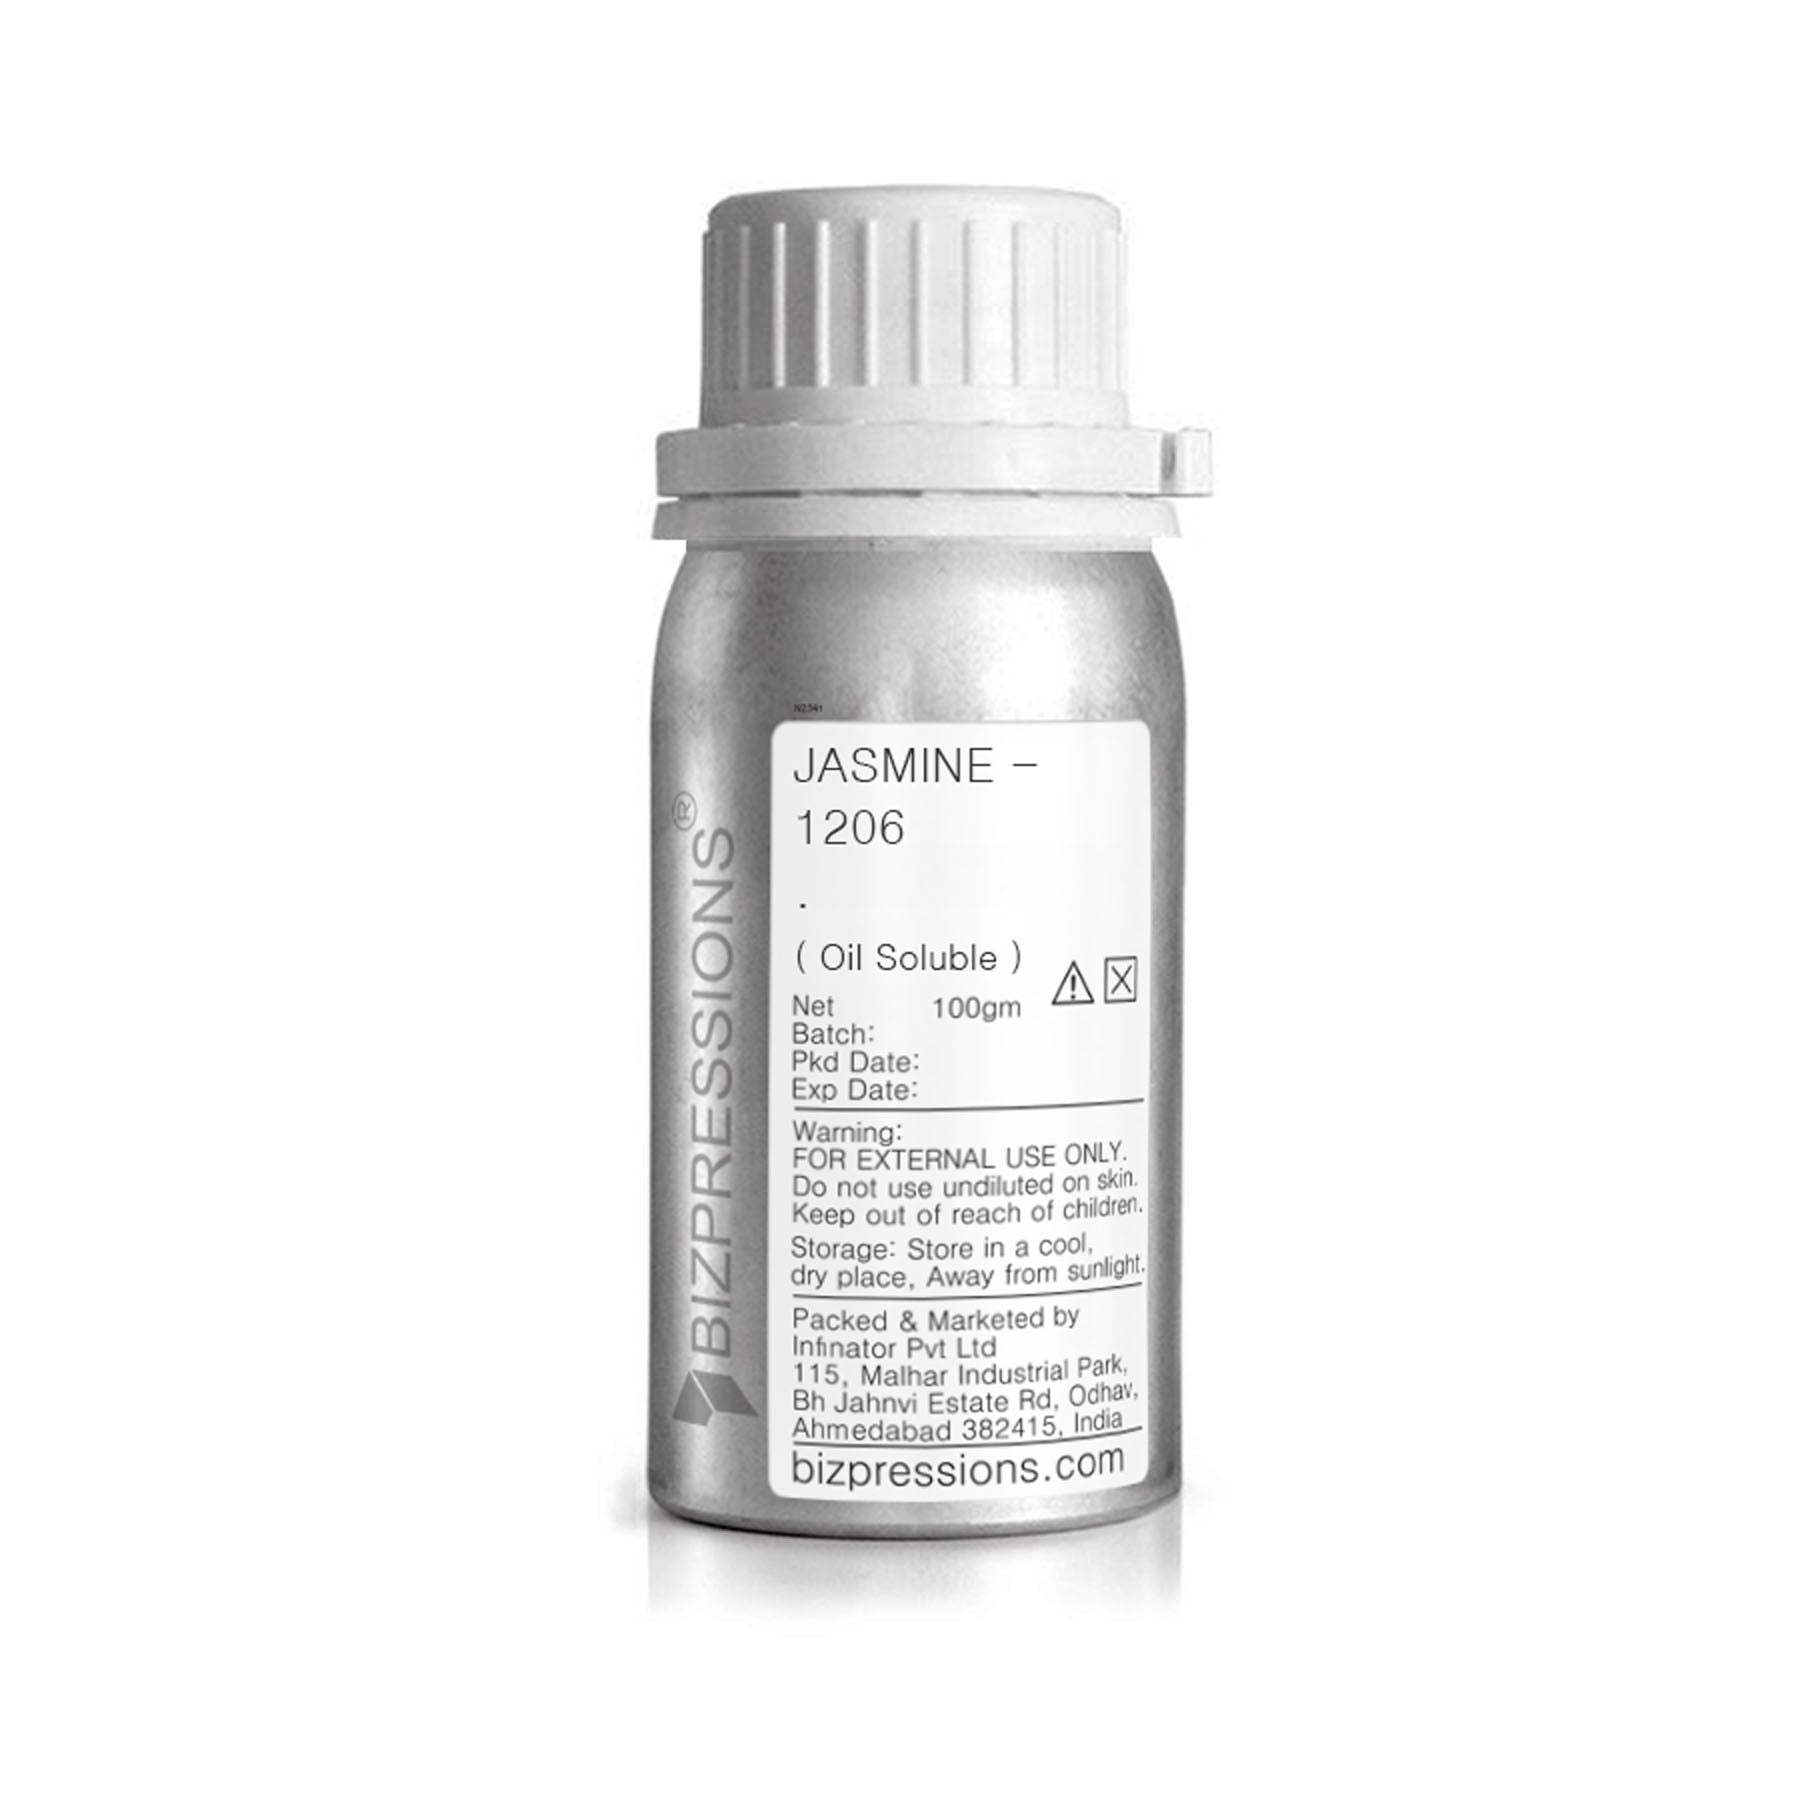 JASMINE - 1206 - Fragrance ( Oil Soluble ) - 100 gm